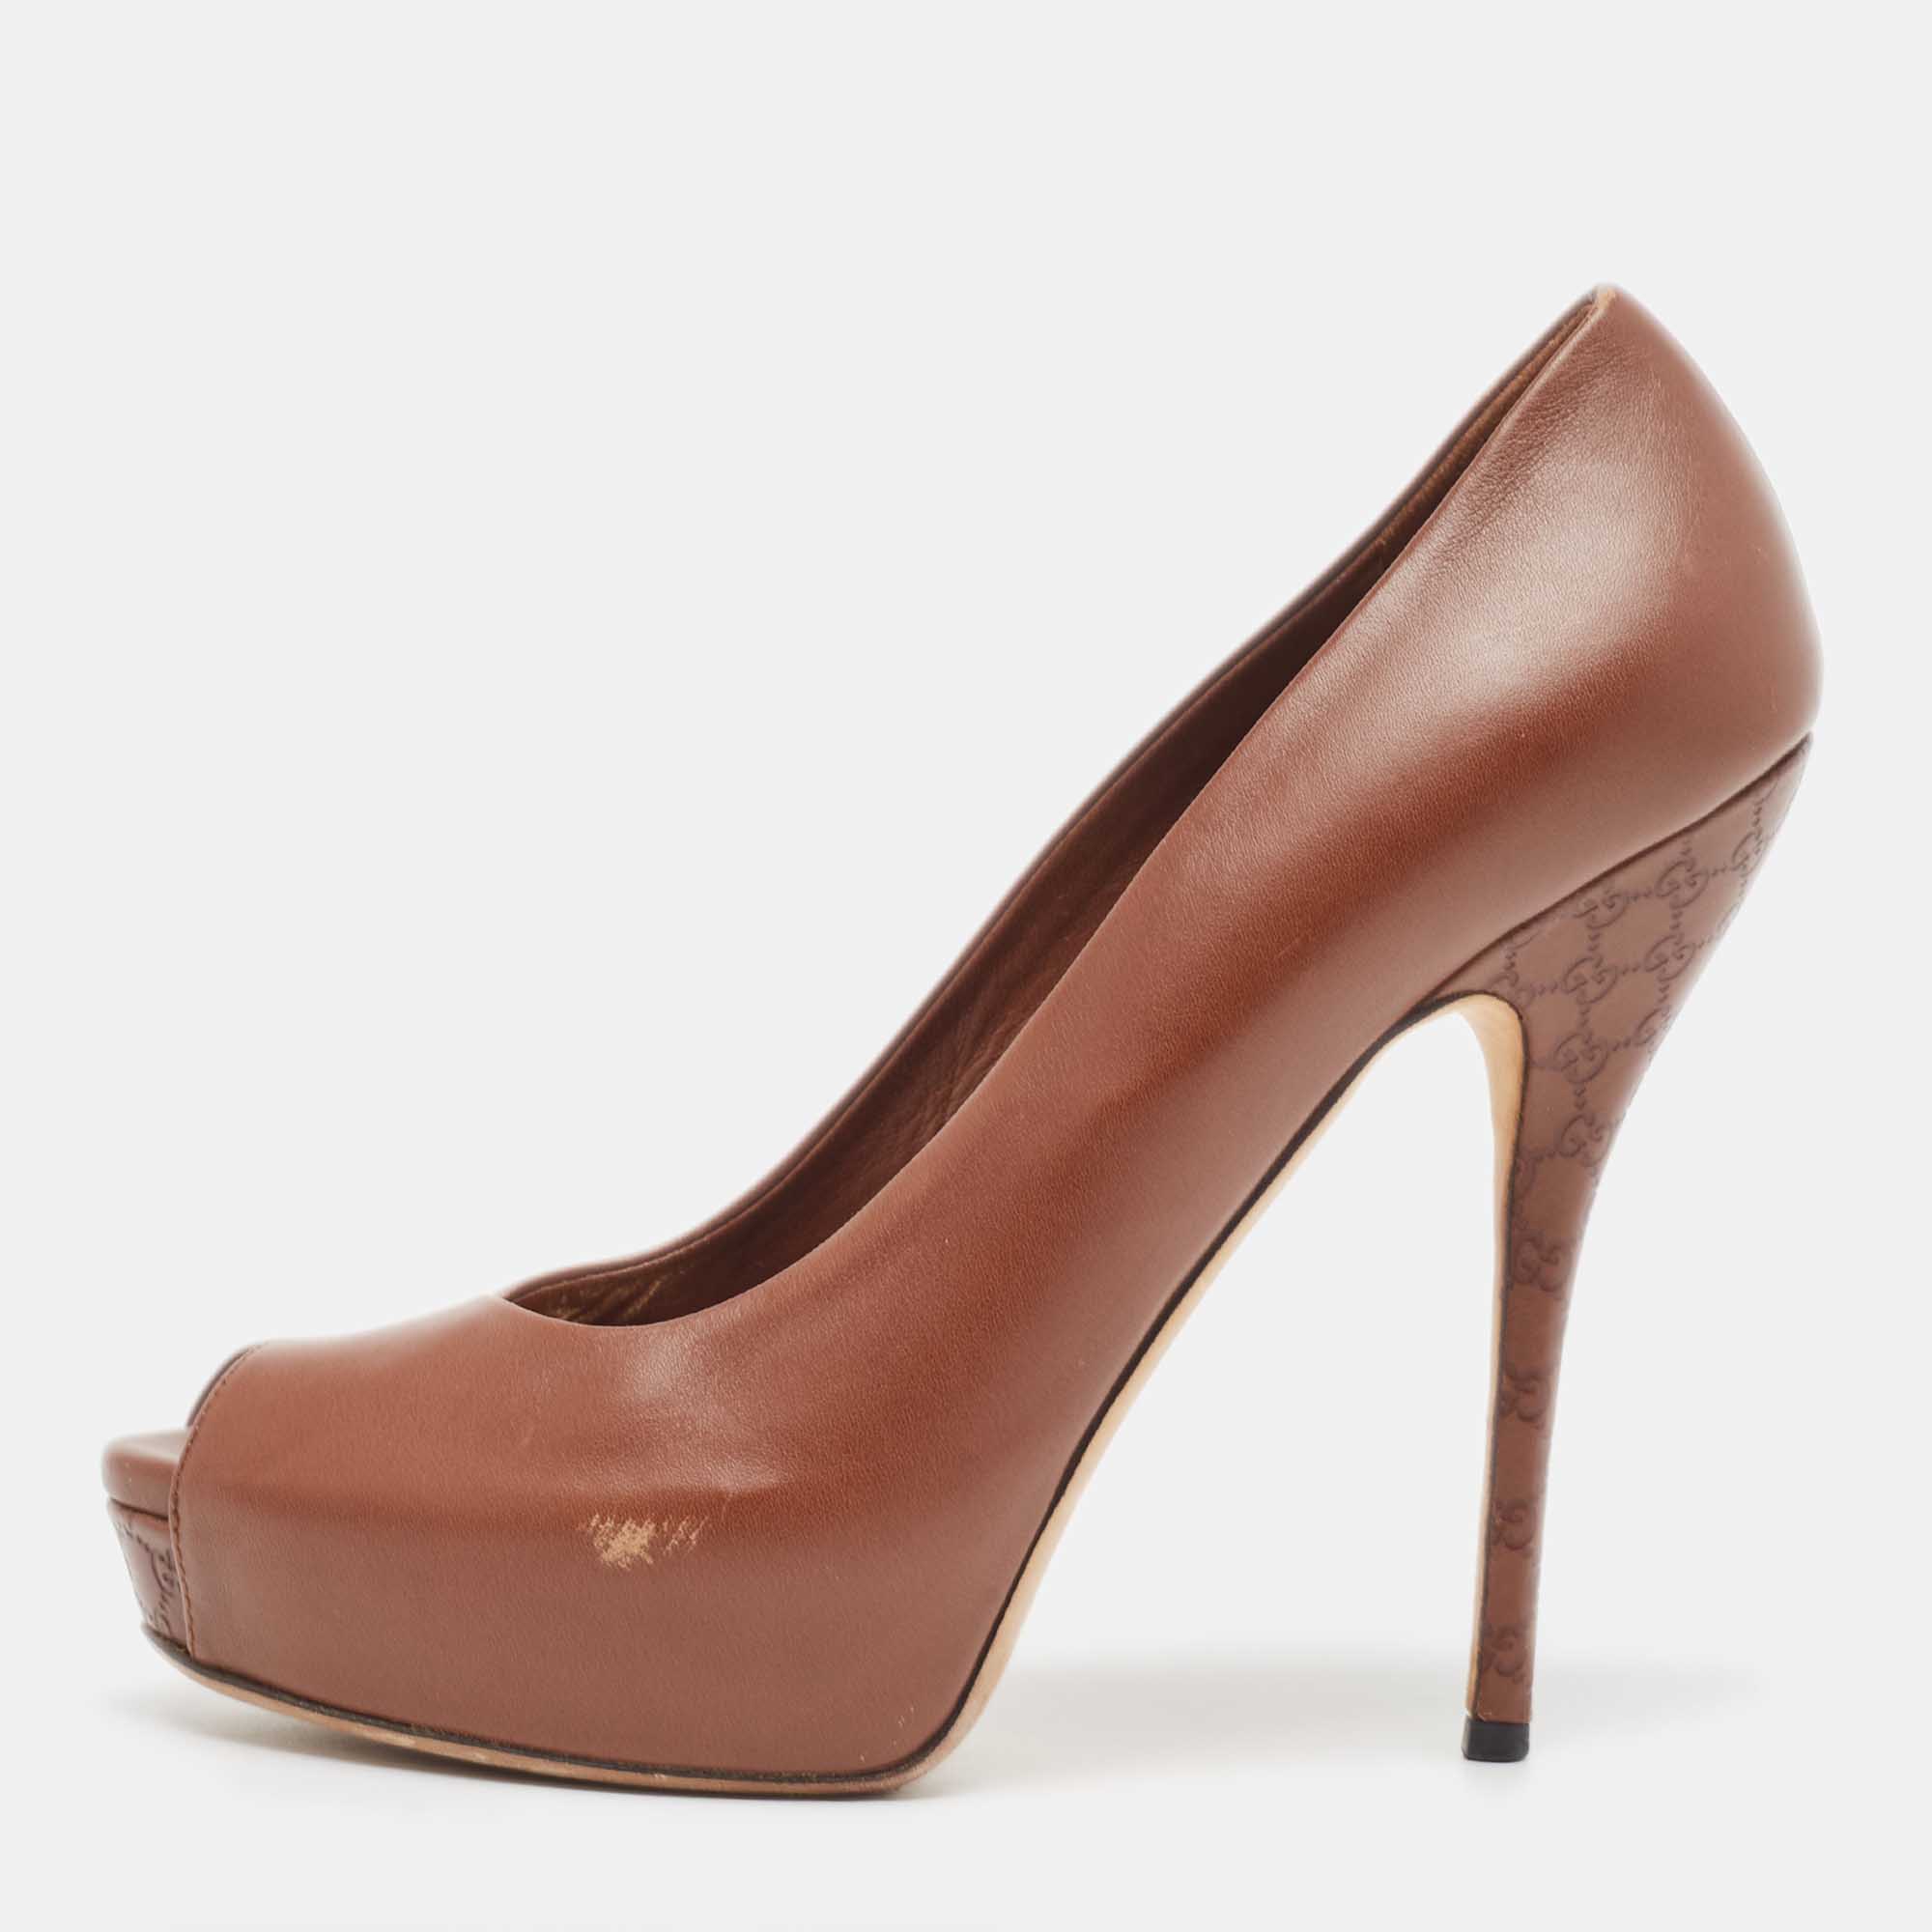 Gucci brown leather platform peep toe pumps size 38.5